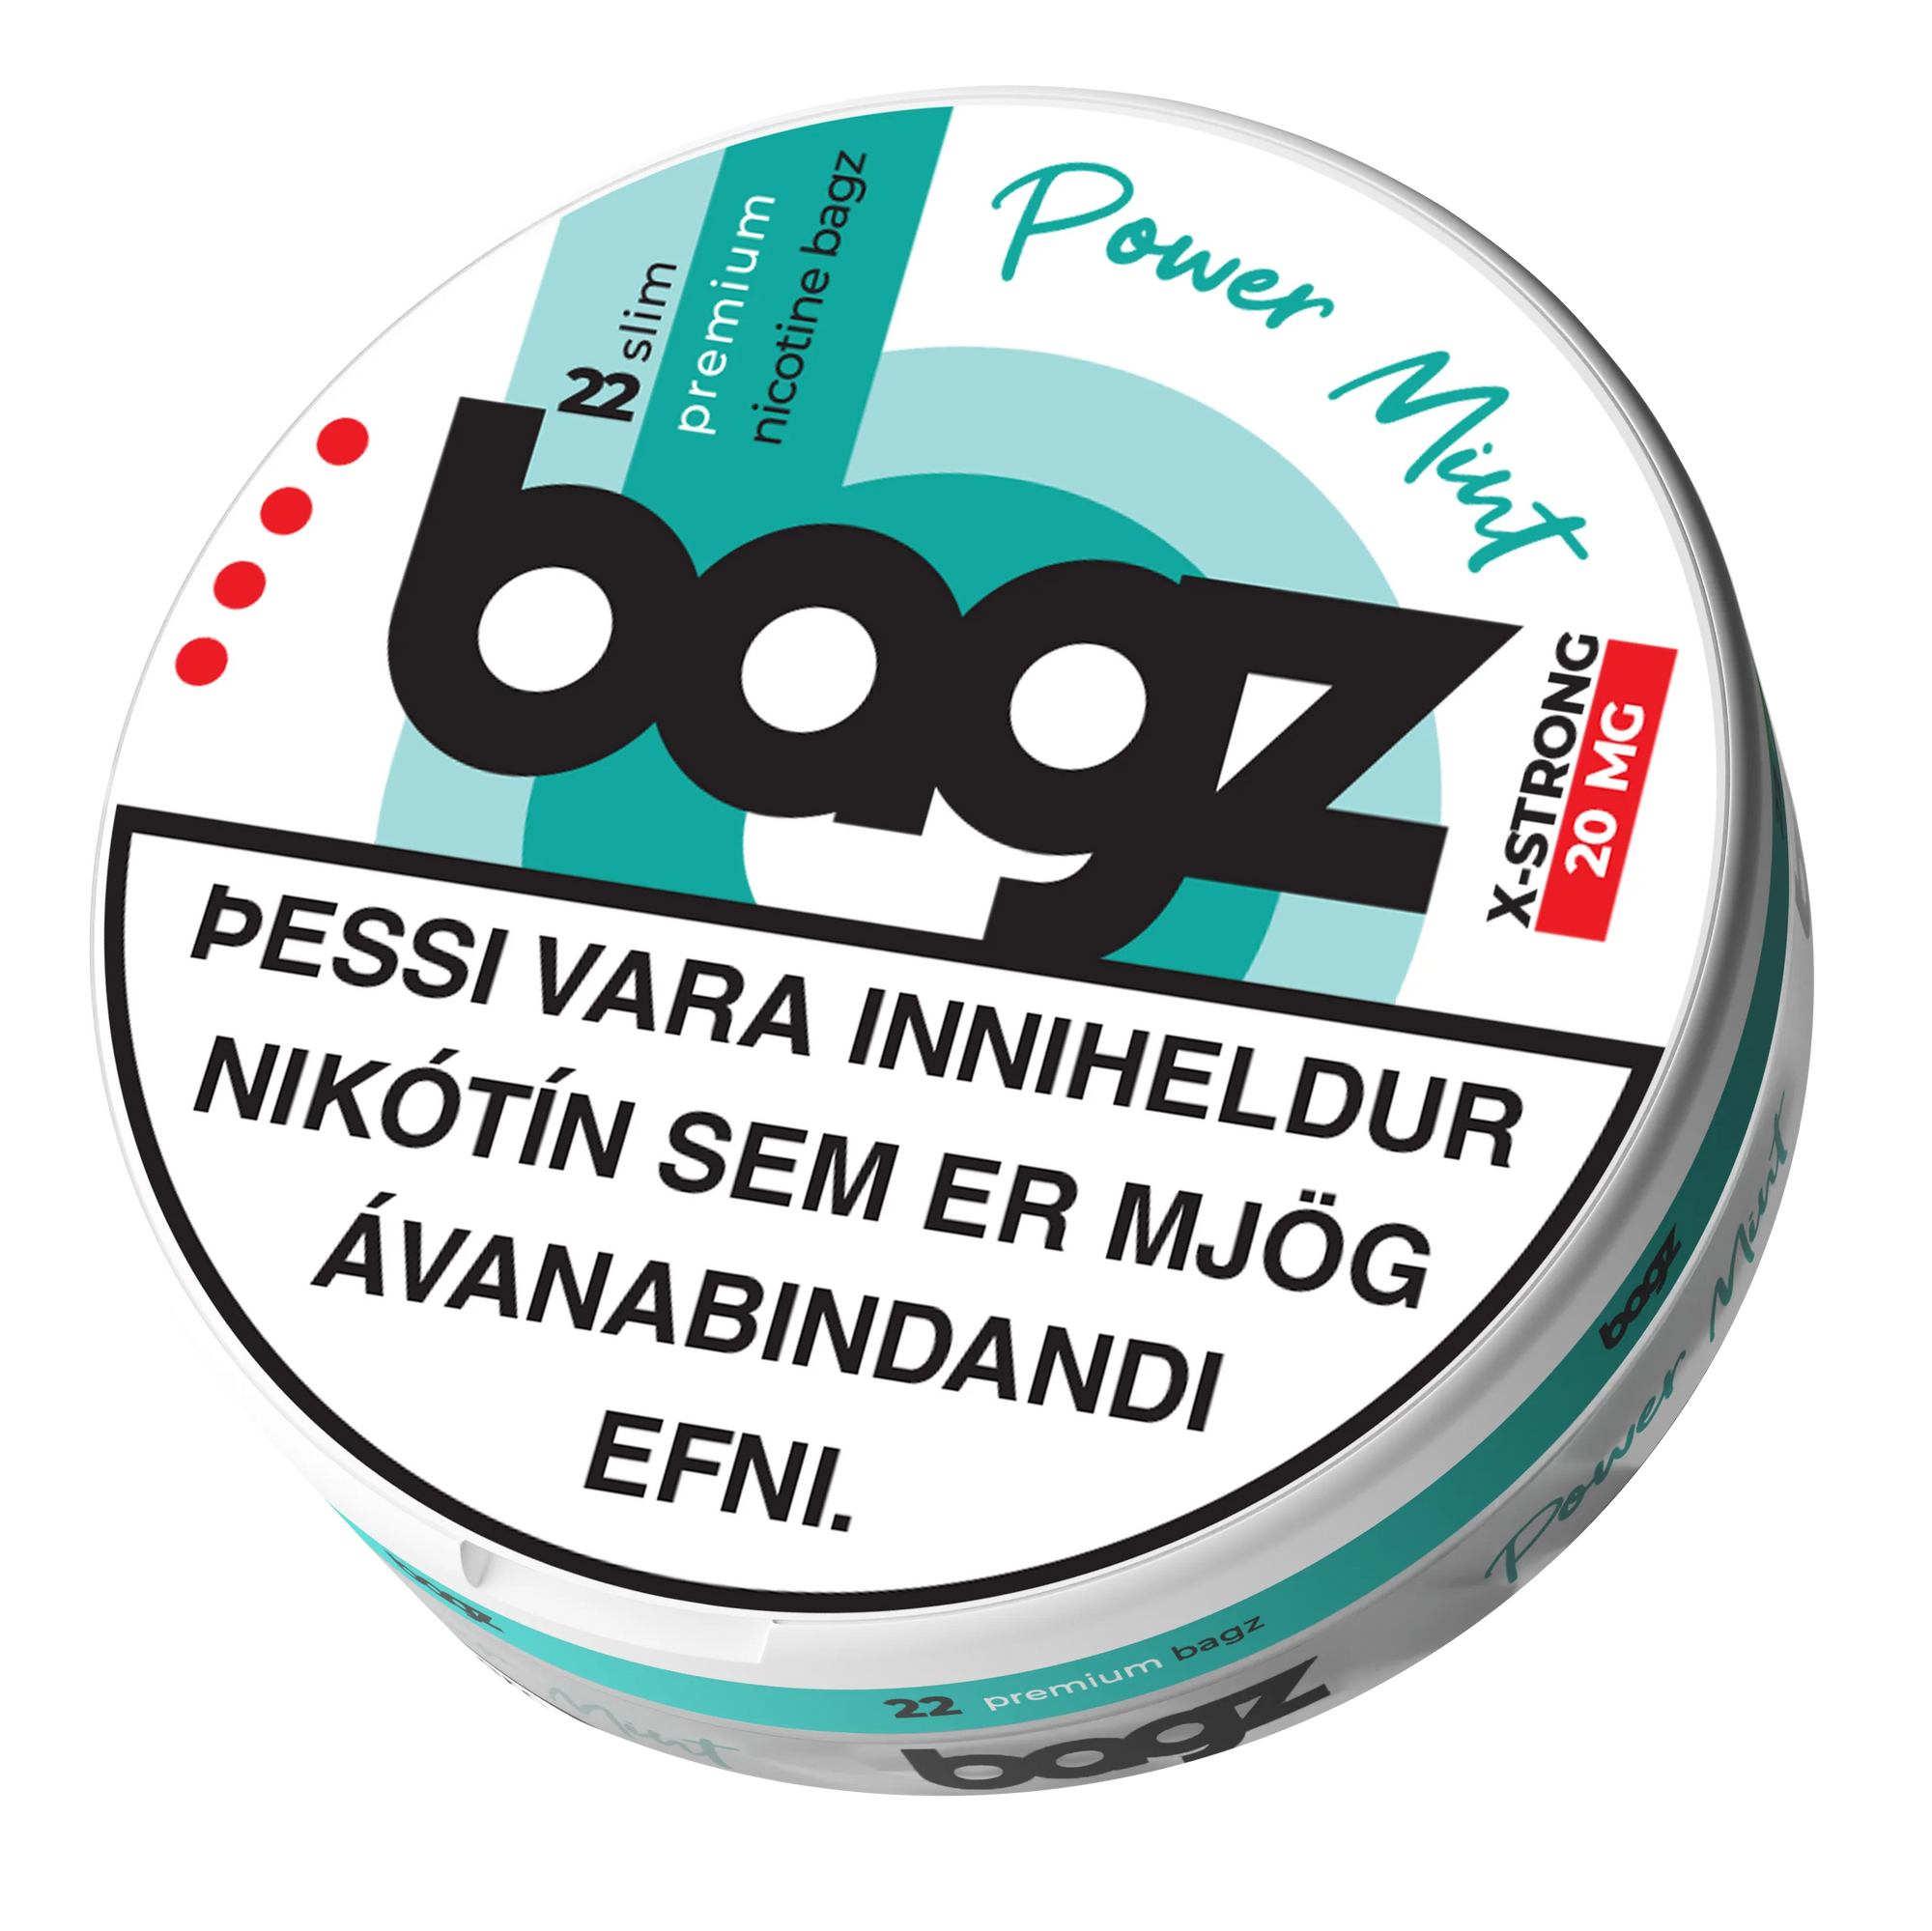 BAGZ - Power Mint 20mg - Nammi.net